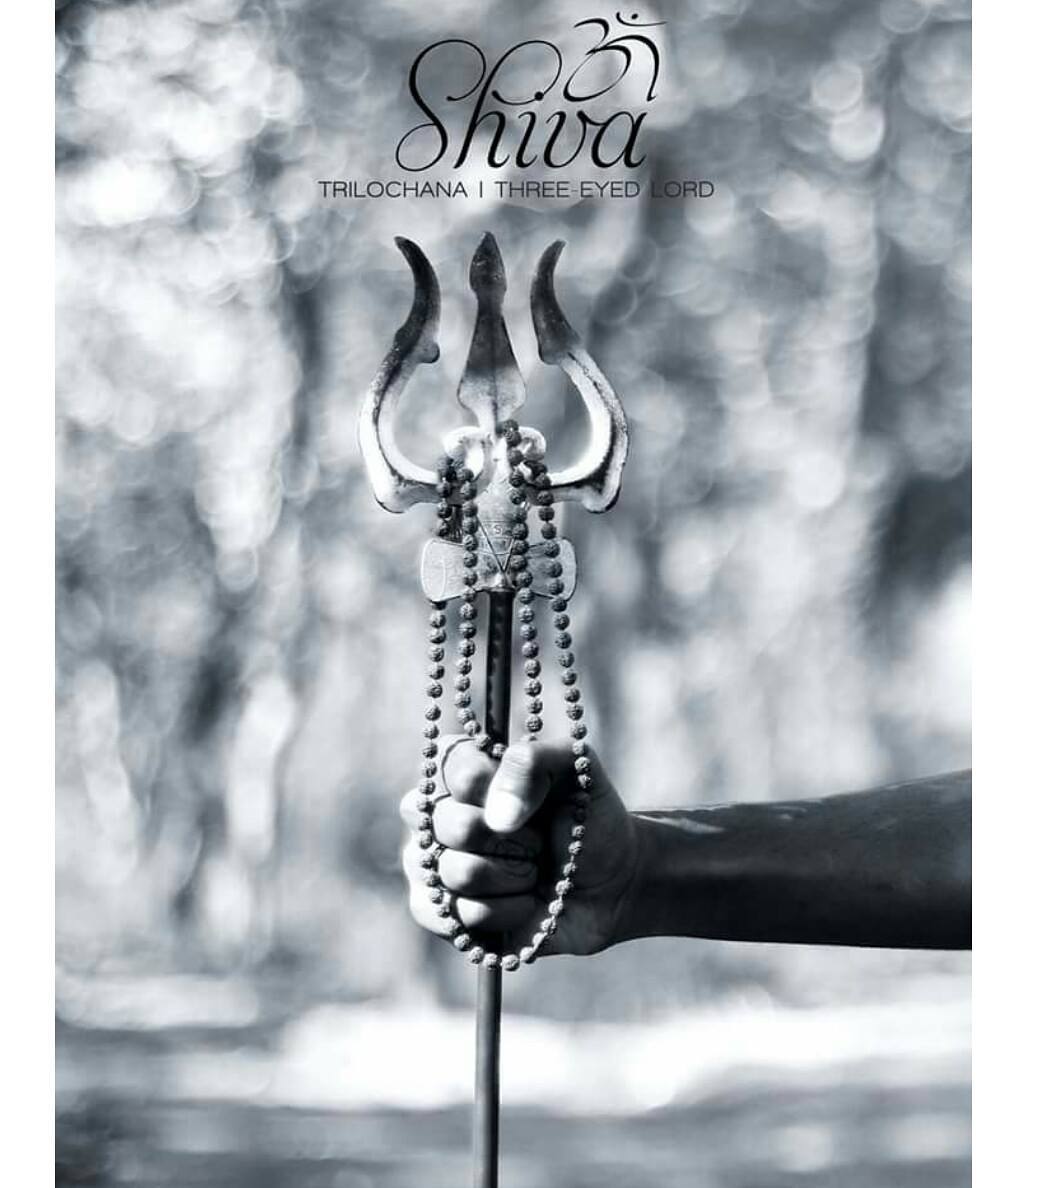 Ohm Shiva

#Trishoolin | One who has a trident in his hands &
#Trilochana | Three-Eyed Lord

MahaShivratri Concept Shoot by : Dip Thakkar & Հիօ ՀօիօլւՀ թզԻէի

@dip_memento_photography | @memento_photography

#om #ohmShiva #omshiv #omshiva #Shivratri #LordShiva #festival #India #gujaratifestivals #shivlord #conceptphotoshoot #photography #kidsphotography #kidsshoot
#bholenath #lordshiva #shiva #festival #photooftheday #picoftheday #conceptart #photo #photoshoot #instagram #instagood #9924227745 #dipmementophotography #dip_memento_photography